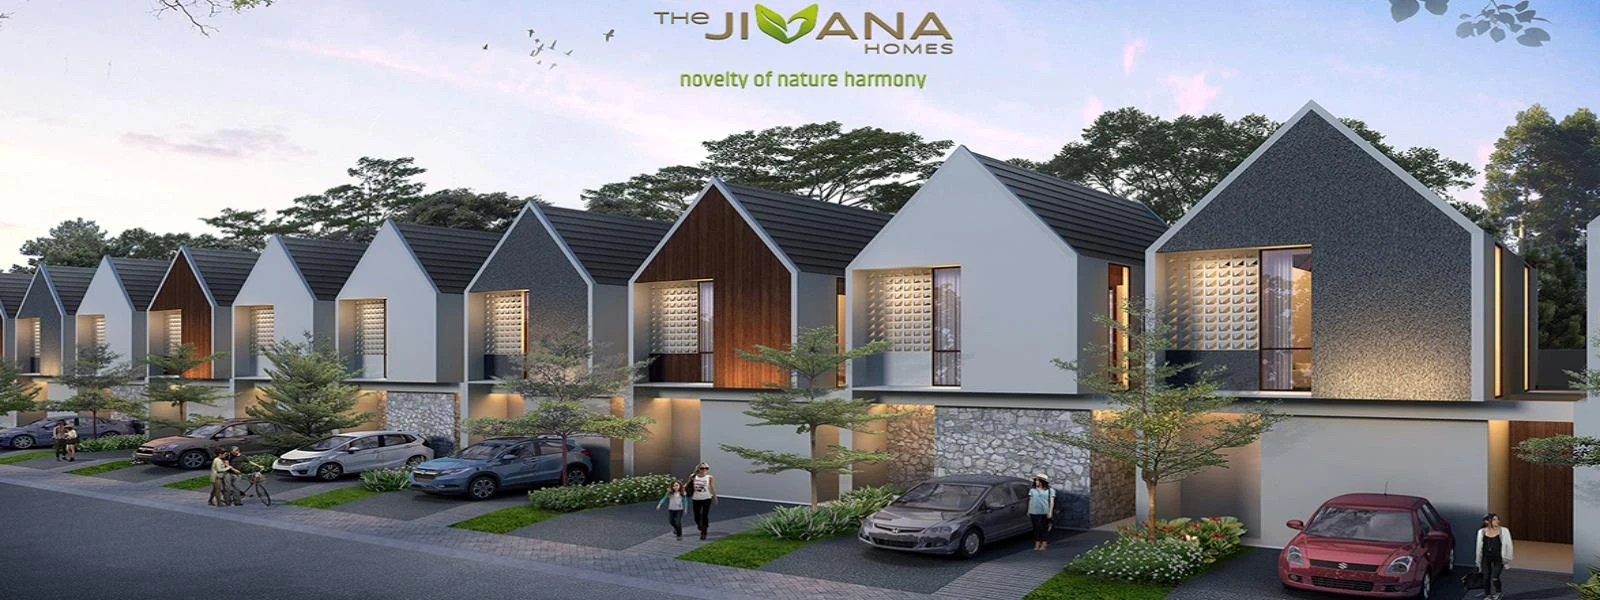 The Jivana Homes Banner